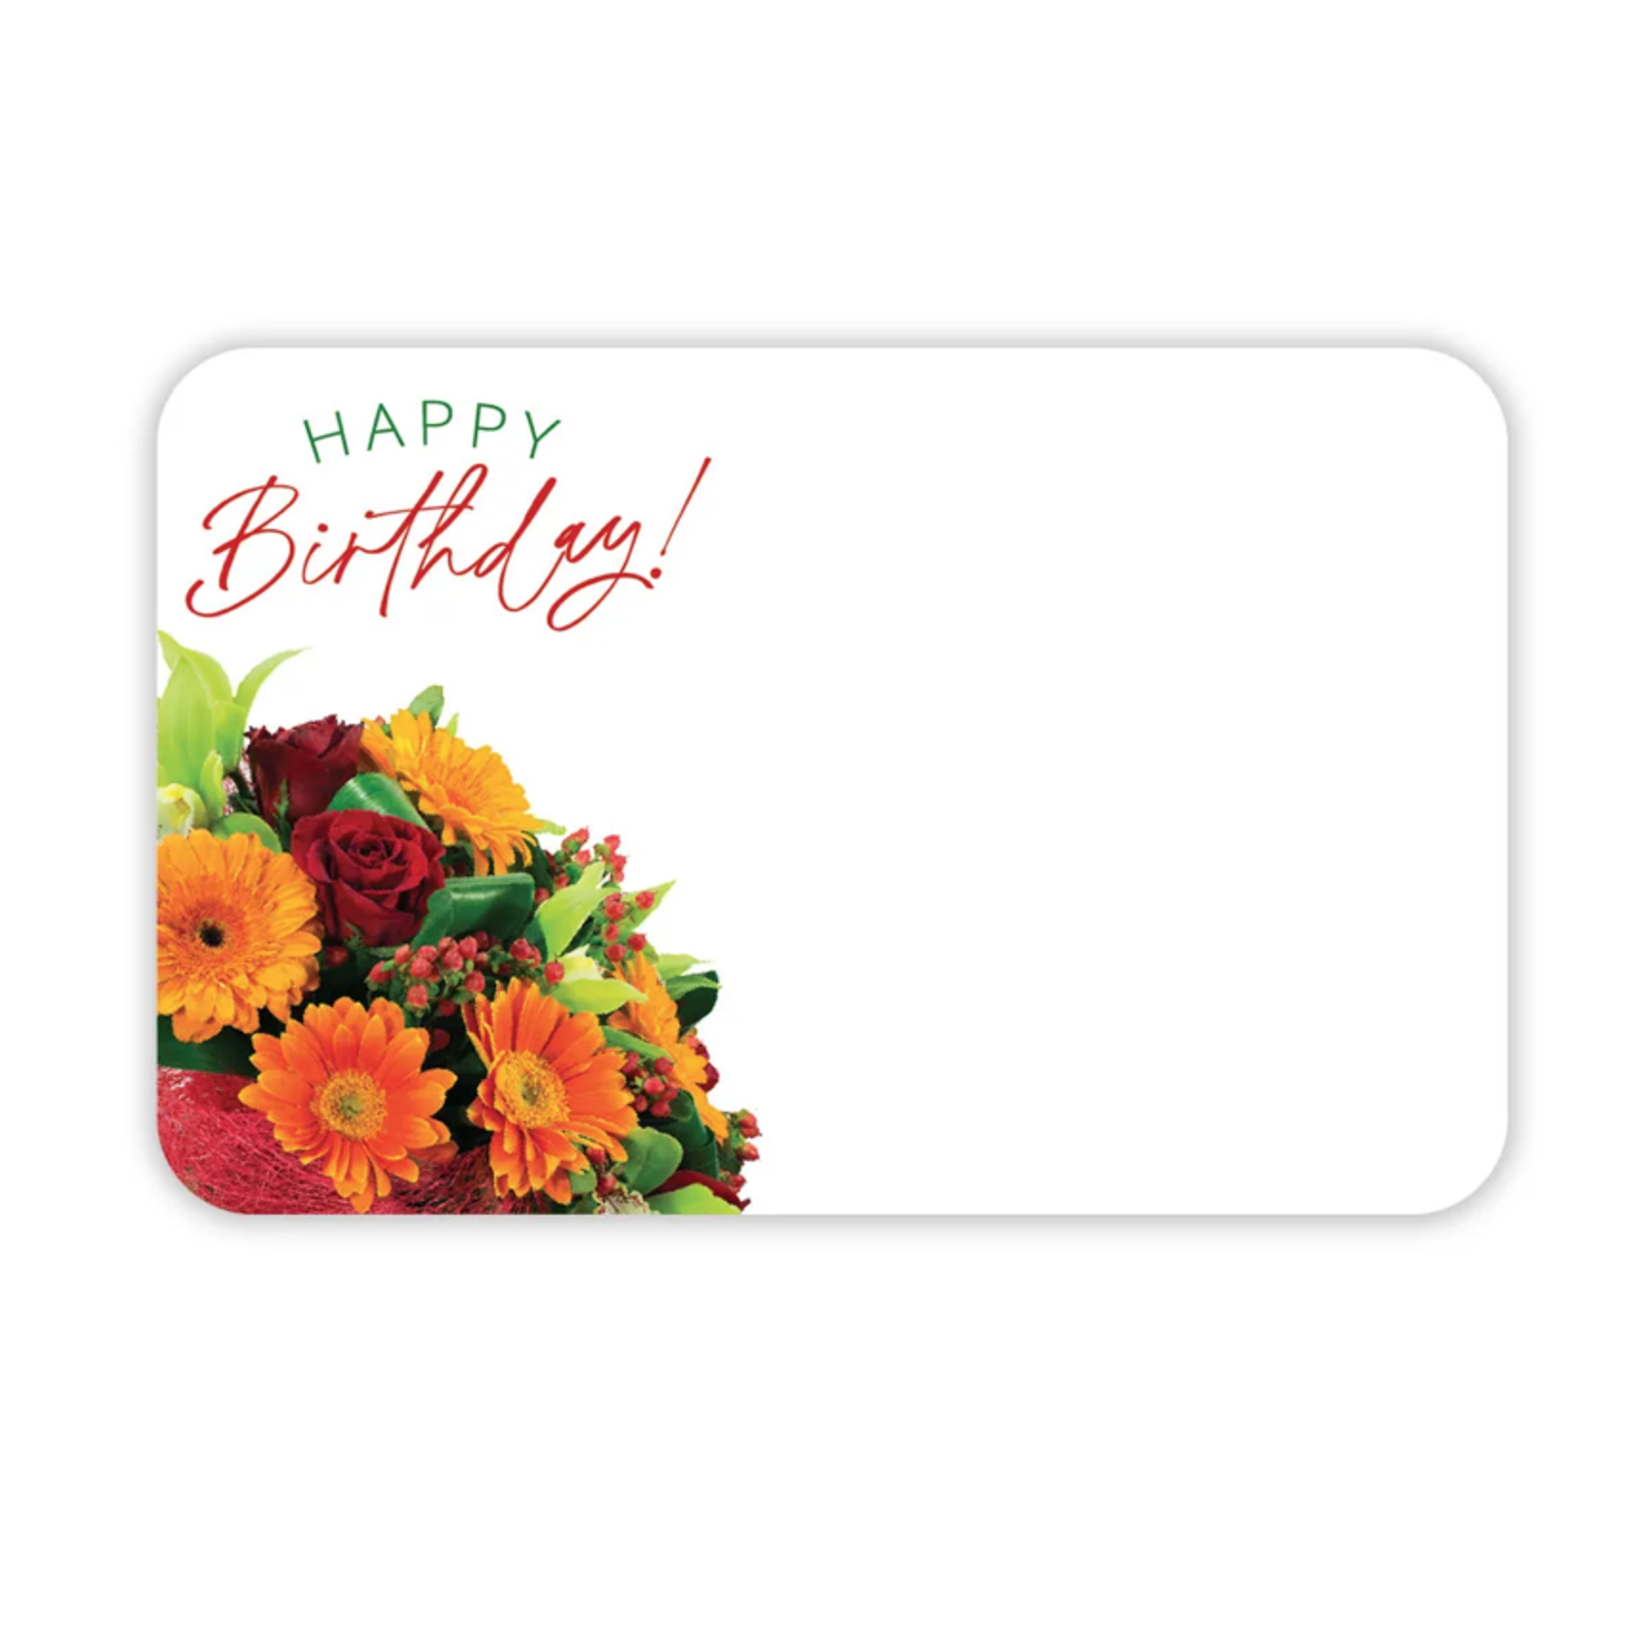 "HAPPY BIRTHDAY" CAPRI CARD